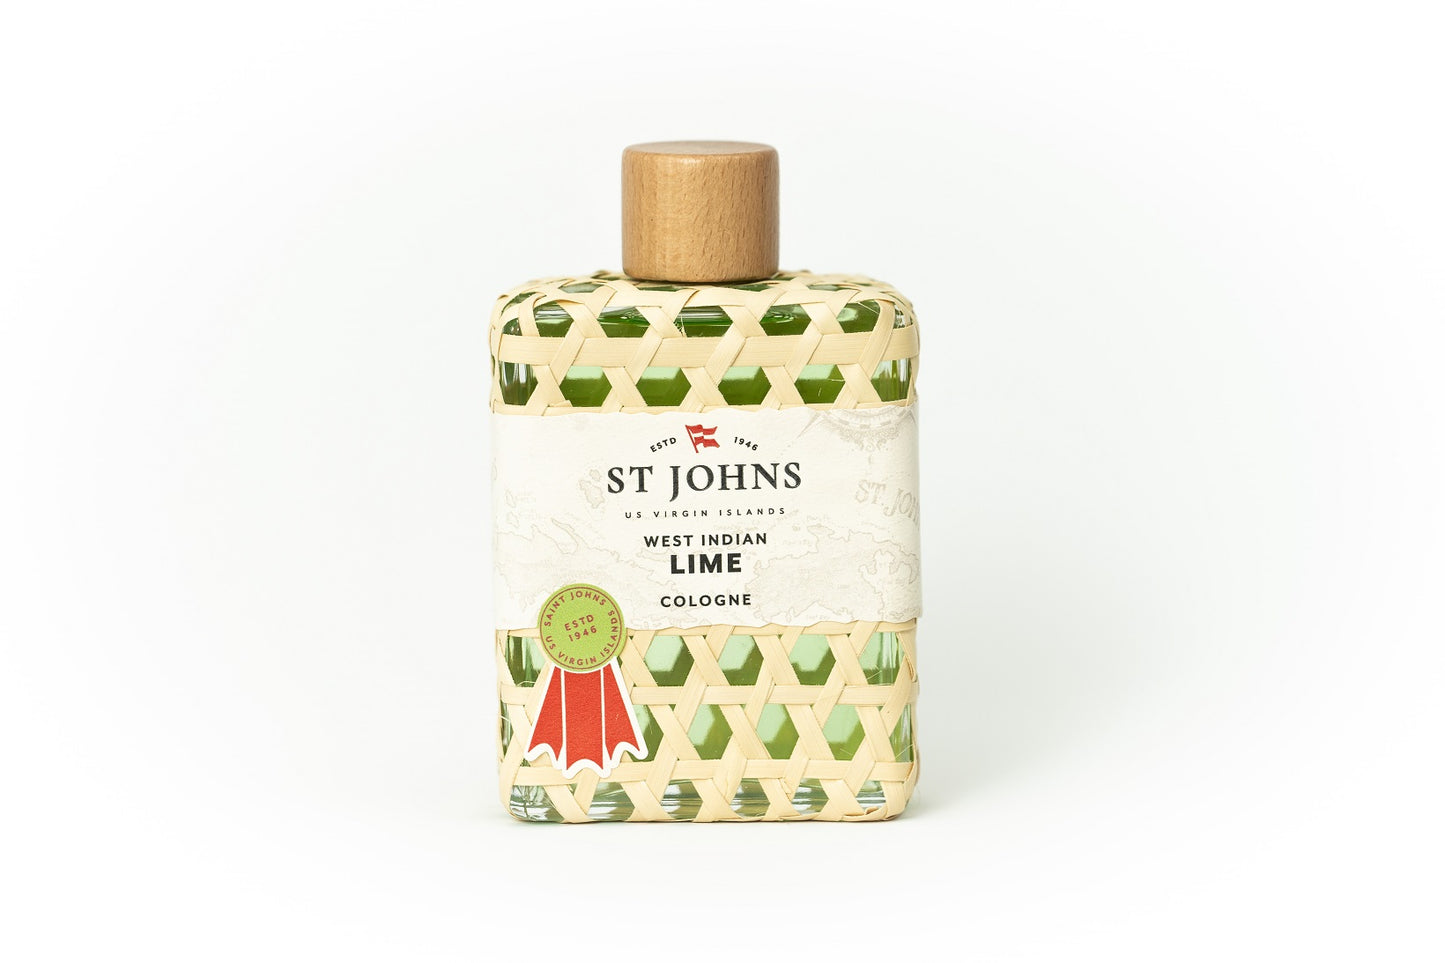 St Johns West Indian Lime Cologne 8 oz.